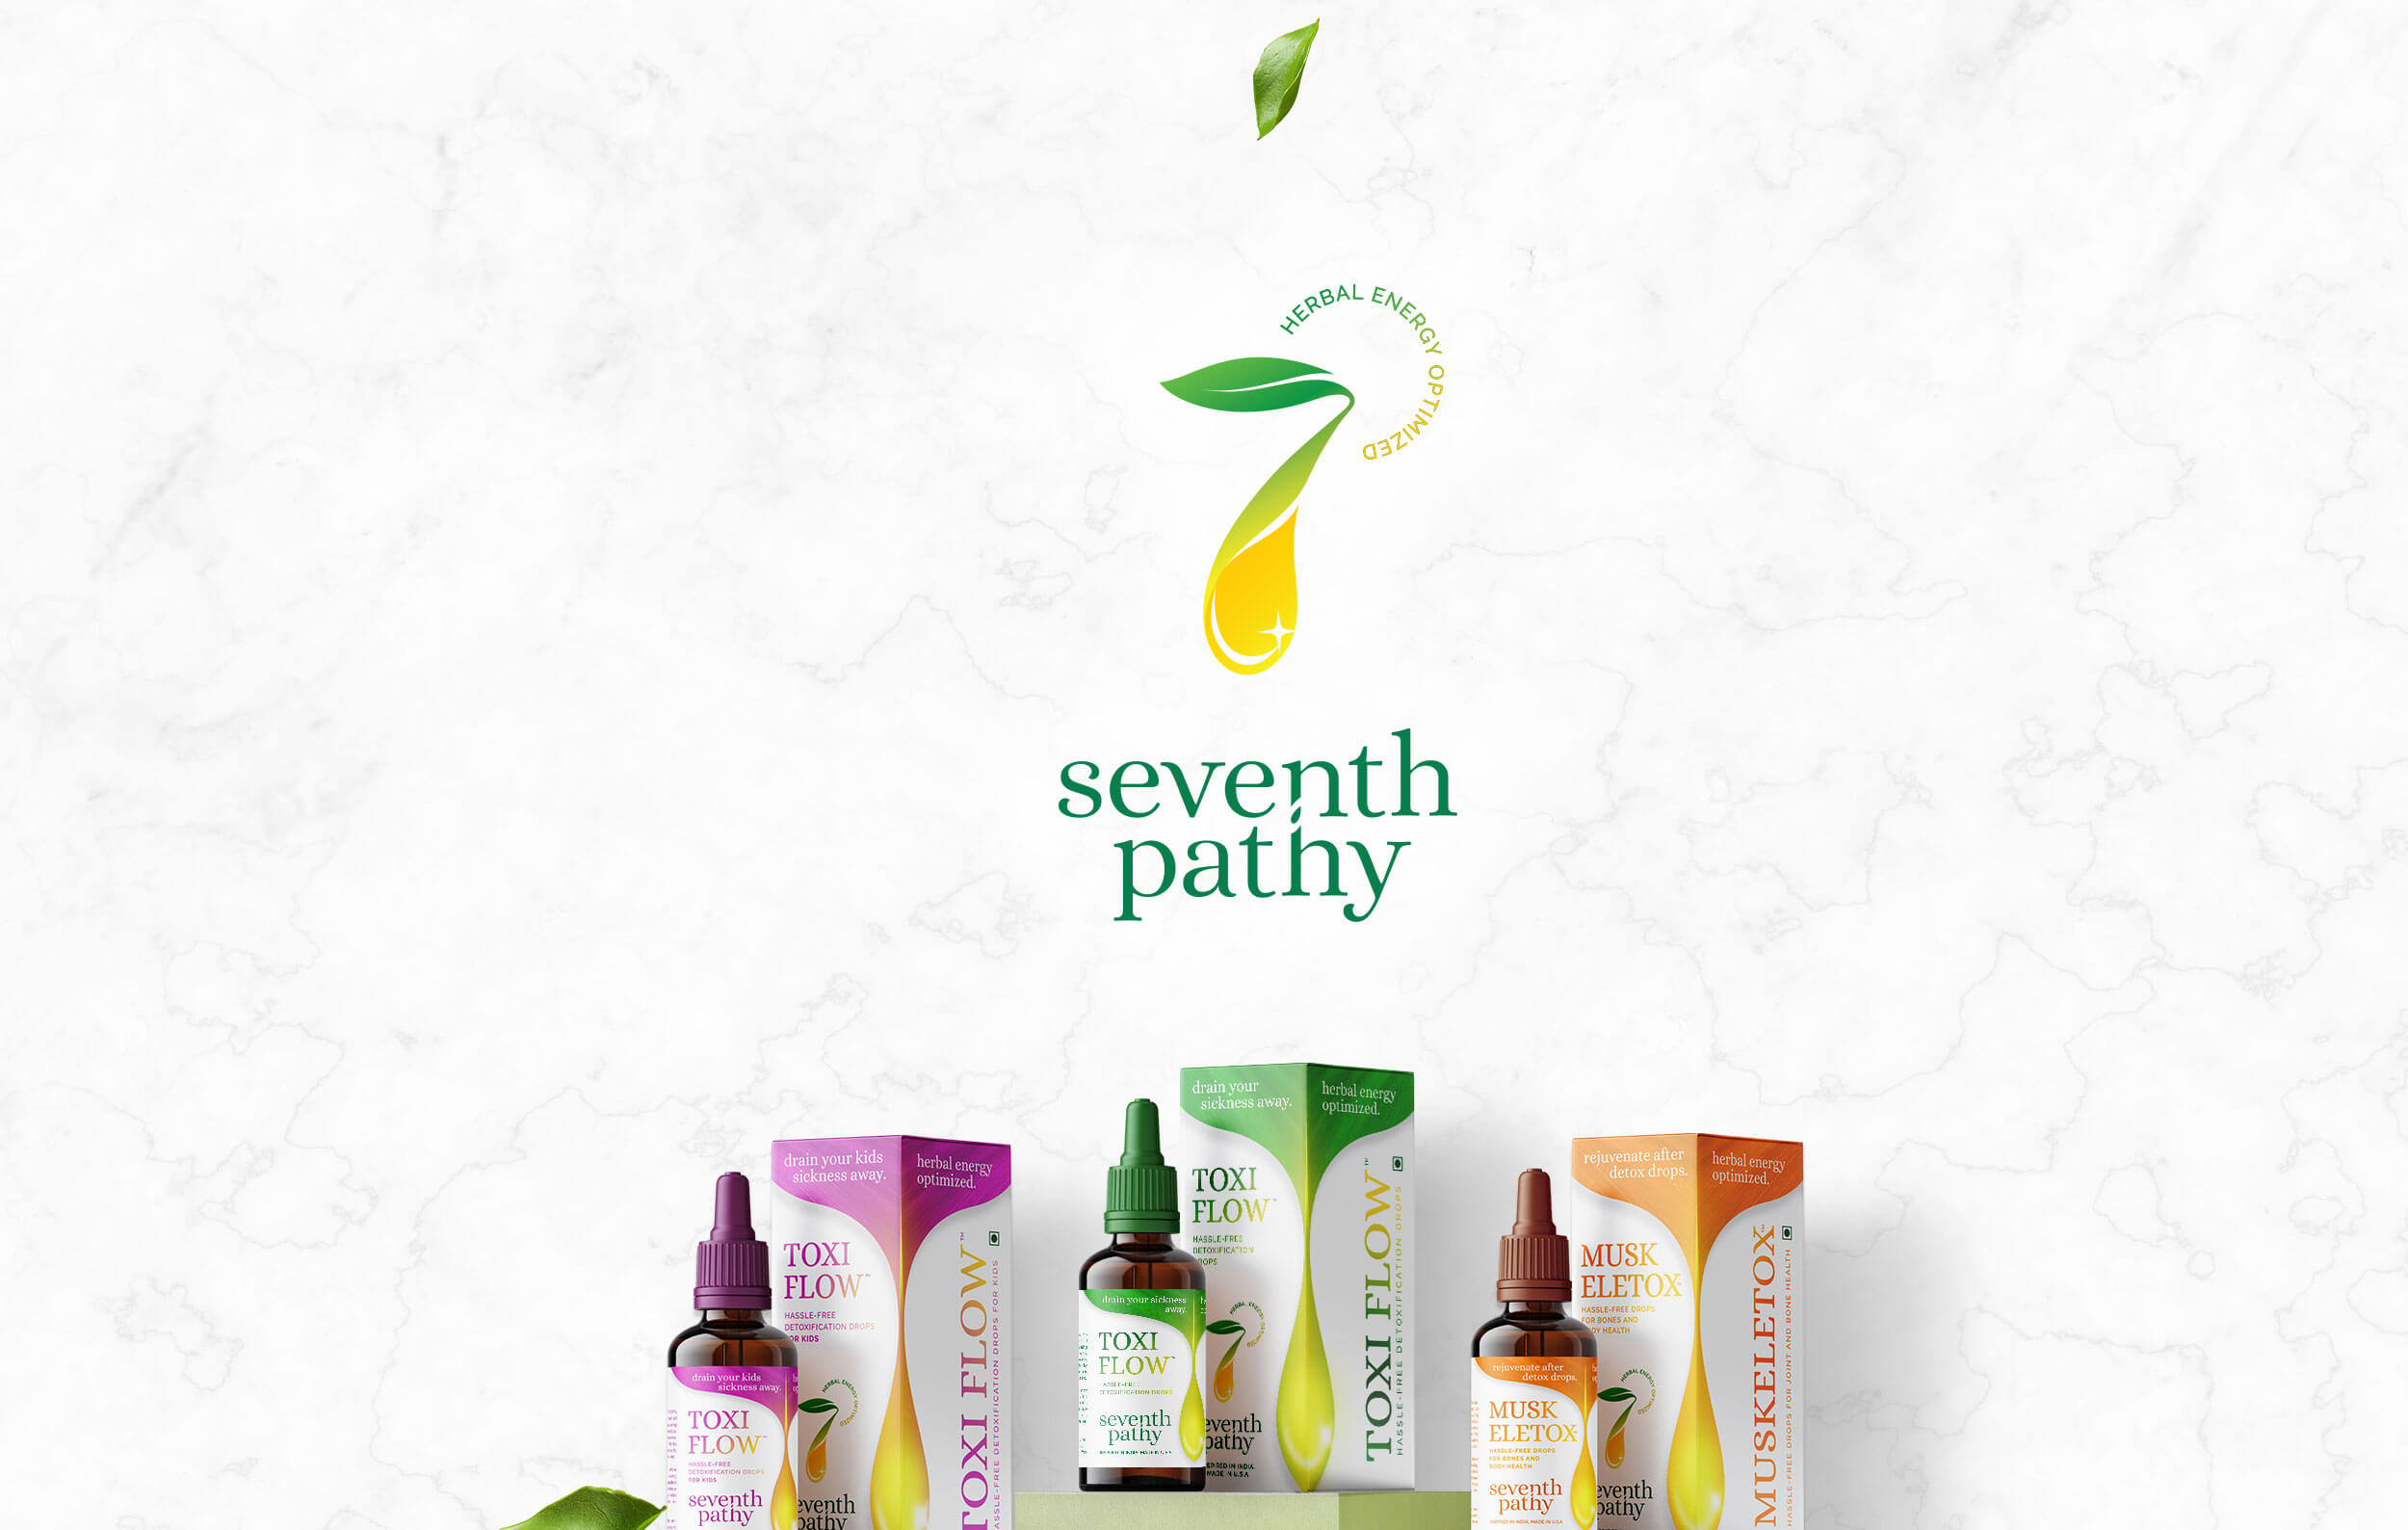 Seventh-Pathy-brand-identity-packaging-design-by-Artisticodopeo-Designz-(9)_2.jpg Image